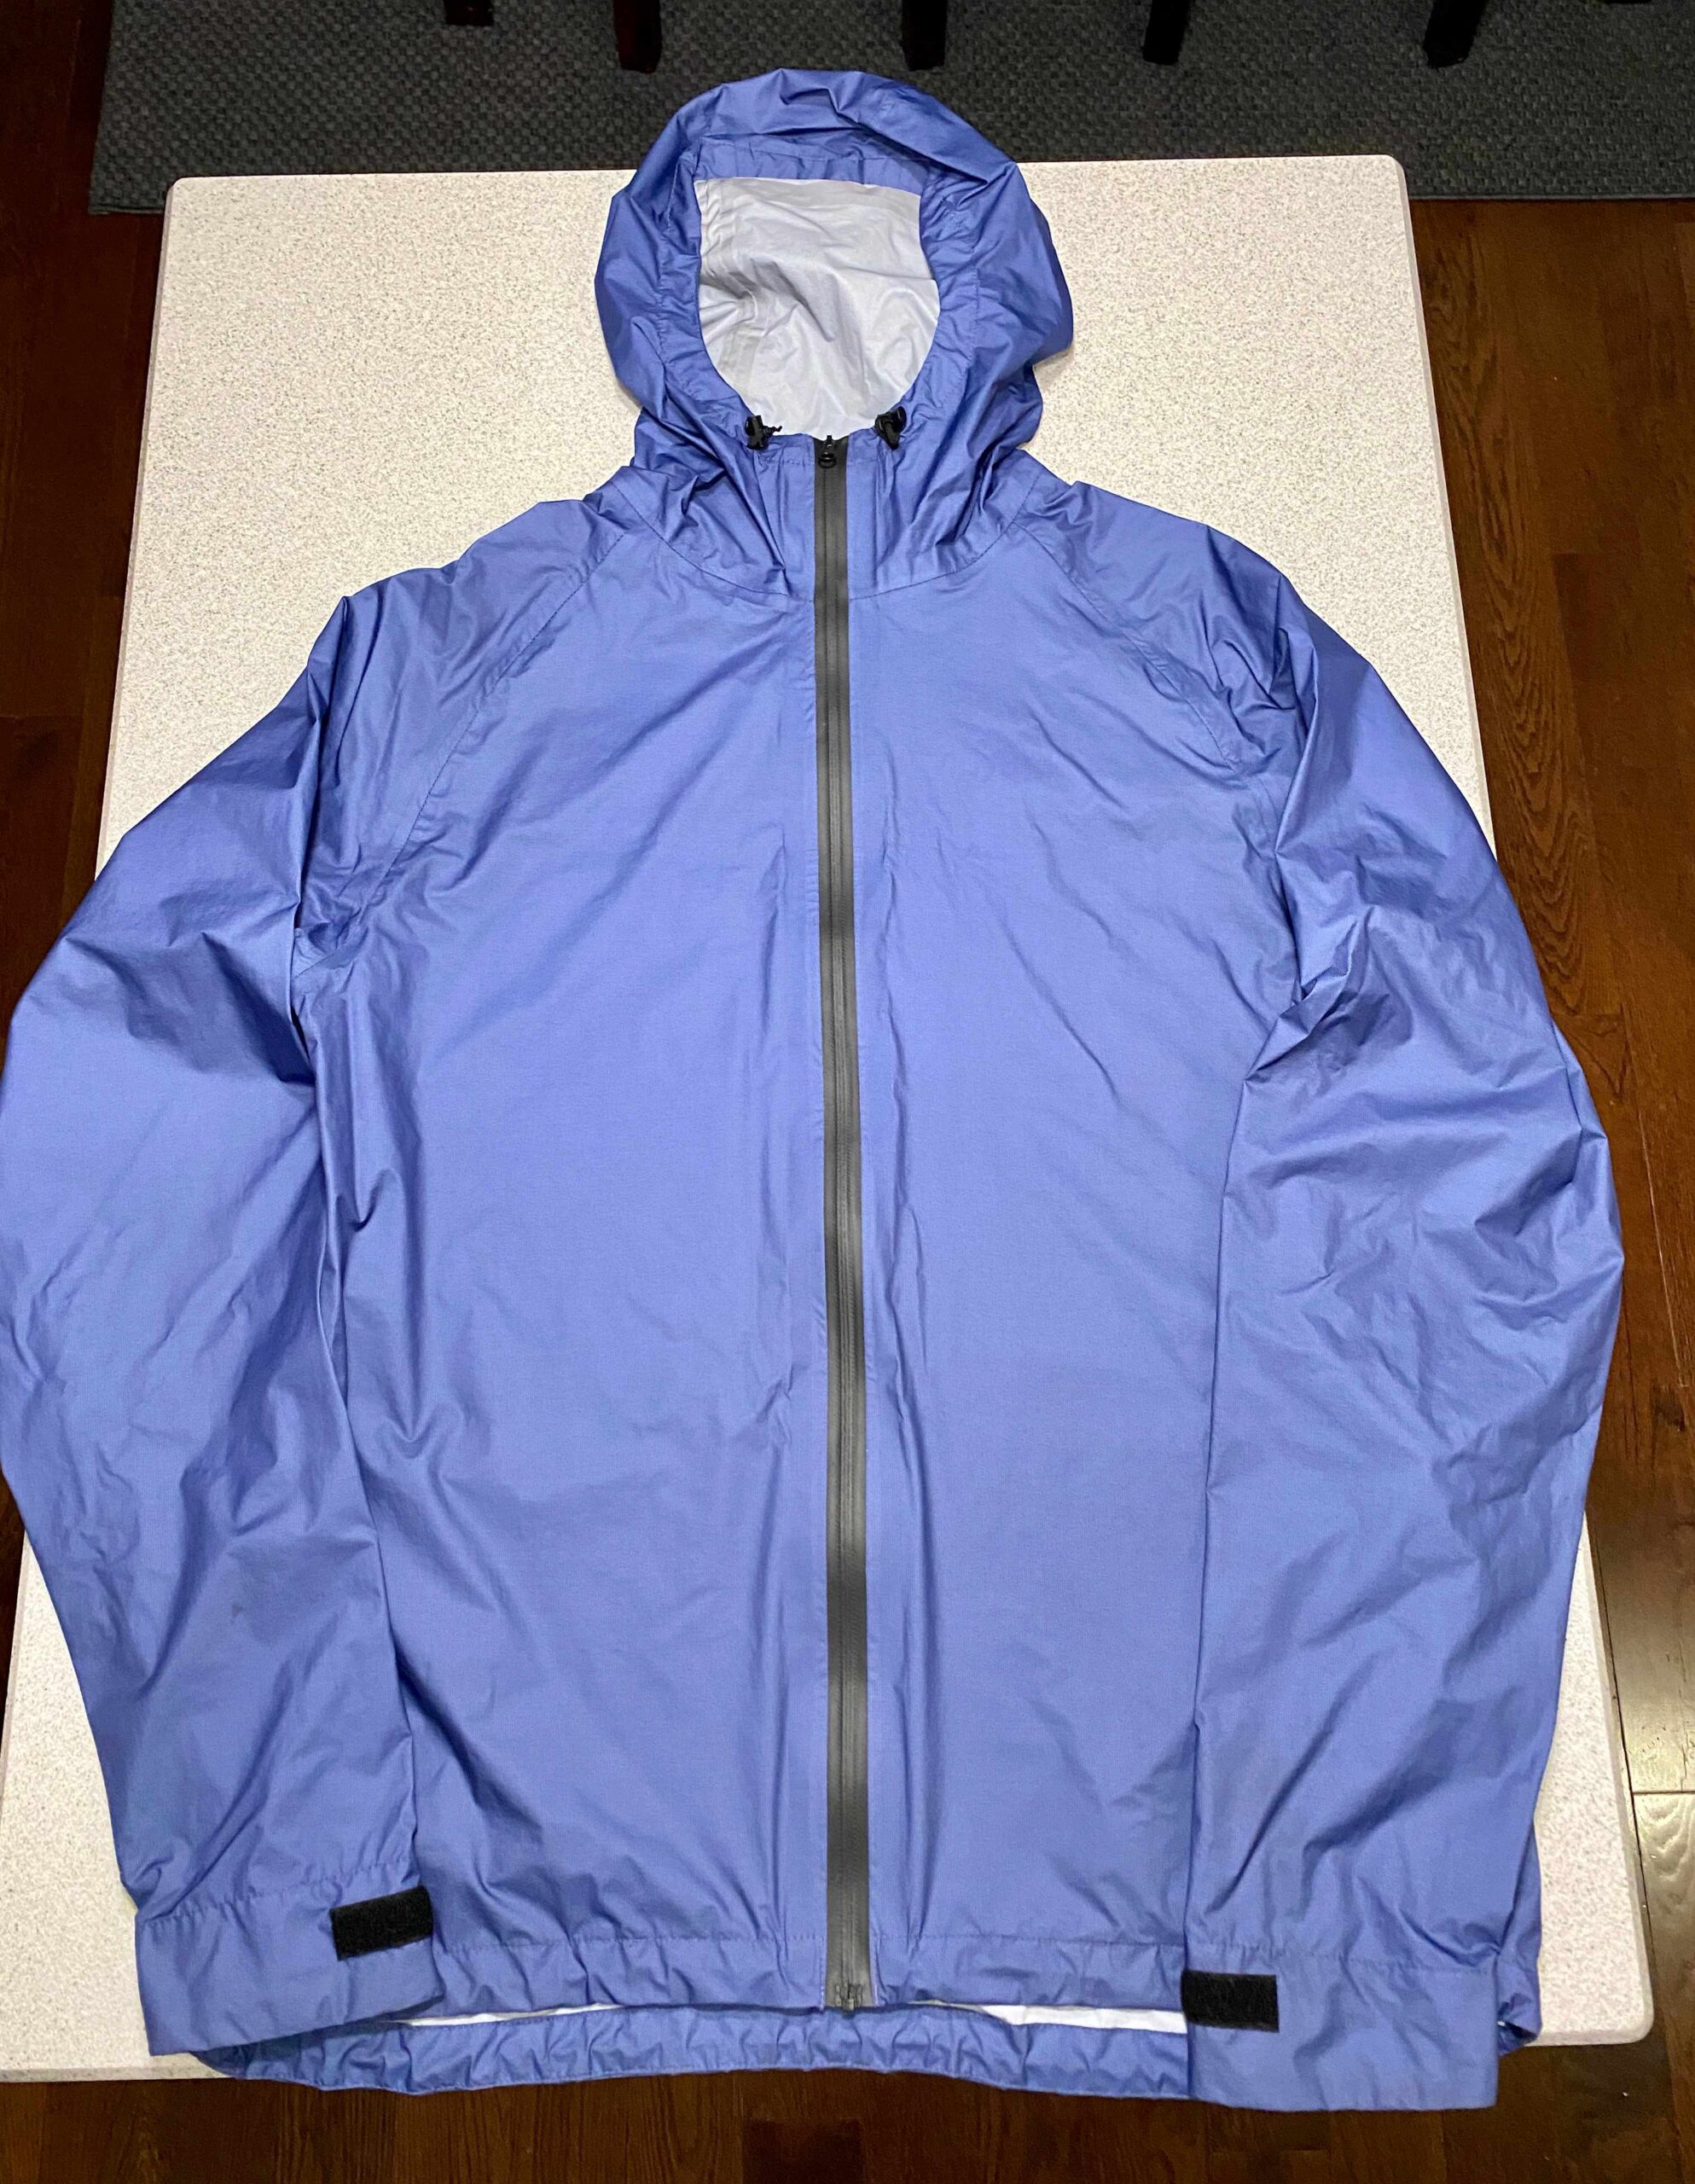 Enlightened Equipment Visp Rain jacket Review